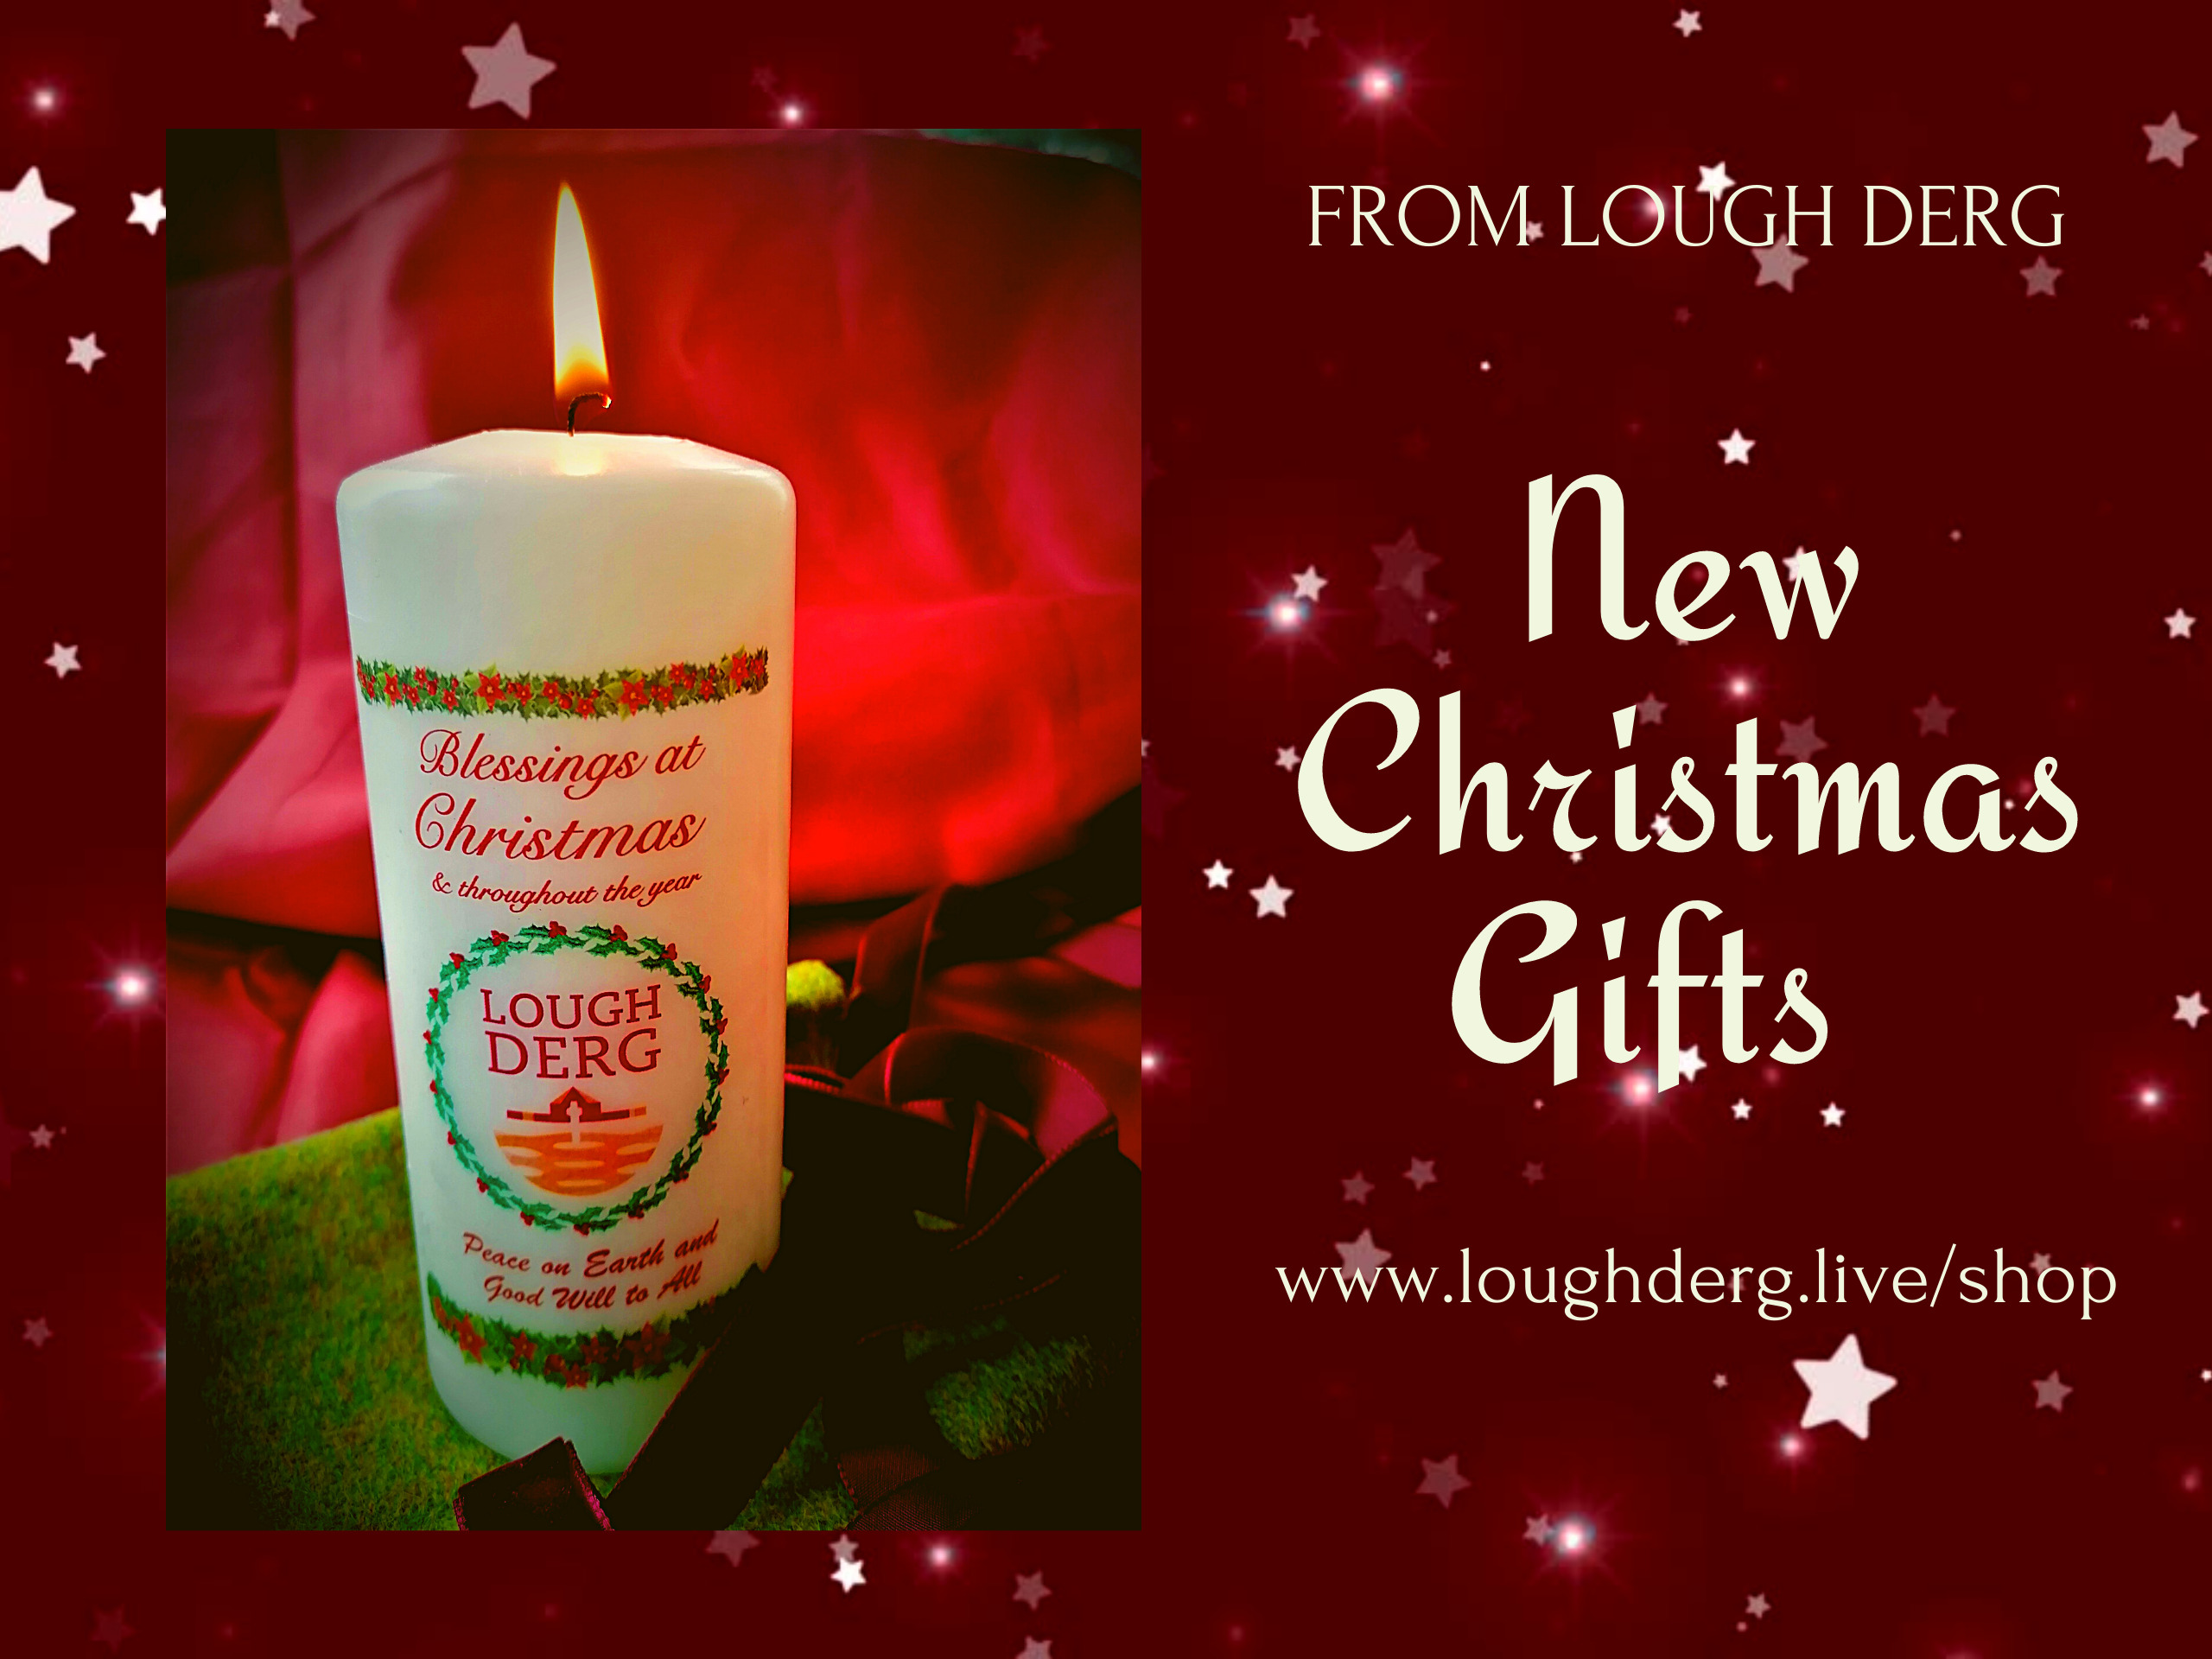 Lough Derg Online shop - Christmas Gifts 2021